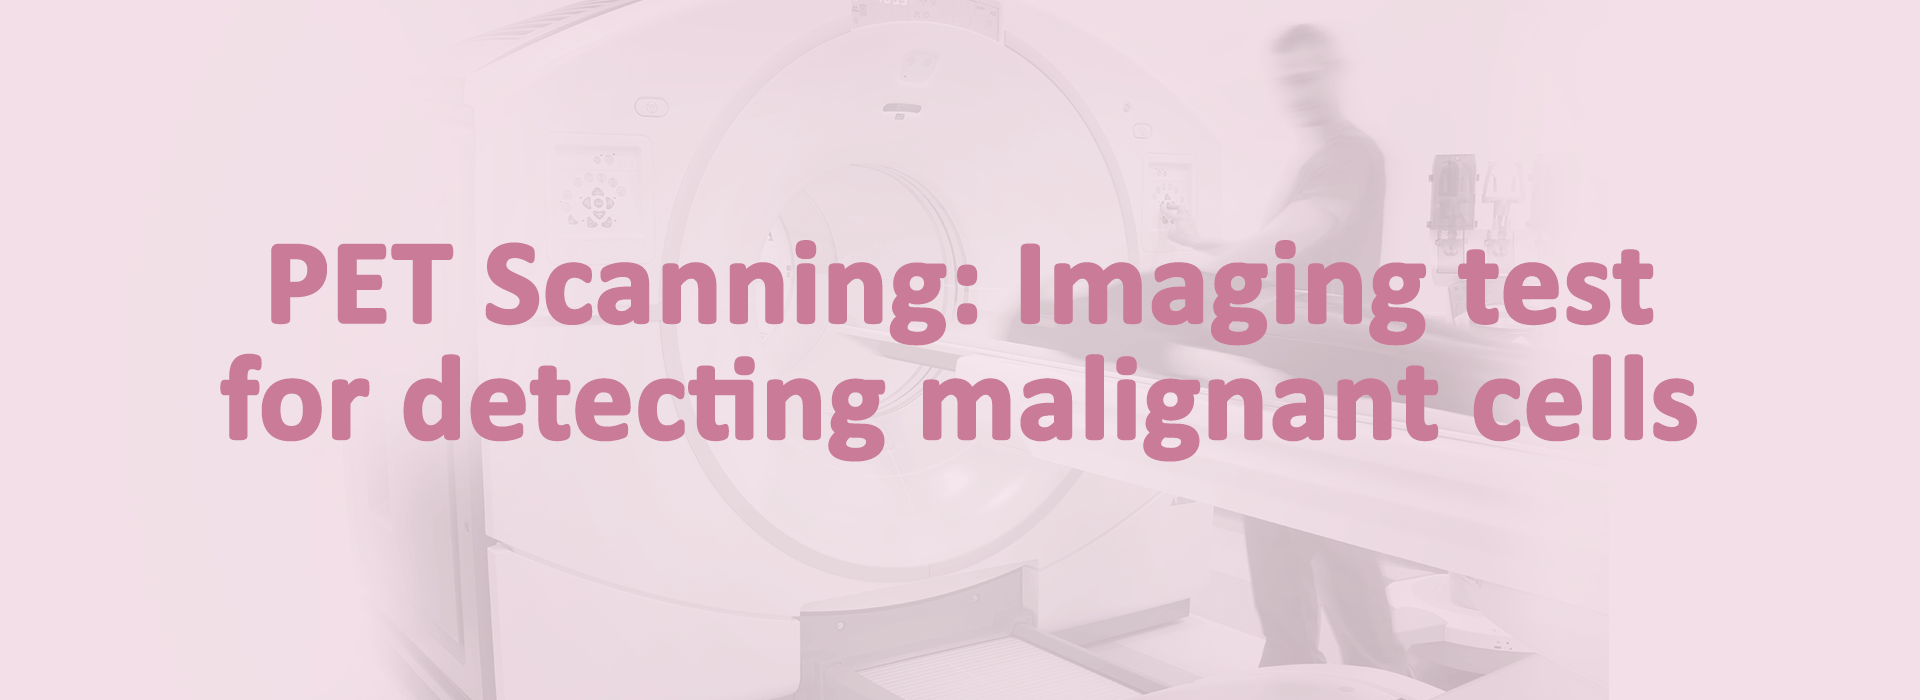 PET Scanning: Imaging test for detecting malignant cells